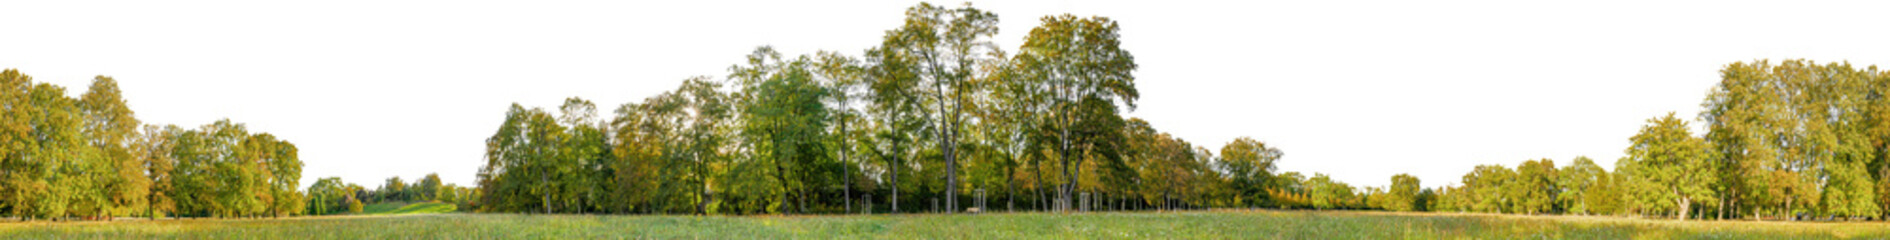 tree line trees autumn xl horizontal seamless arch viz cutout - 664376279